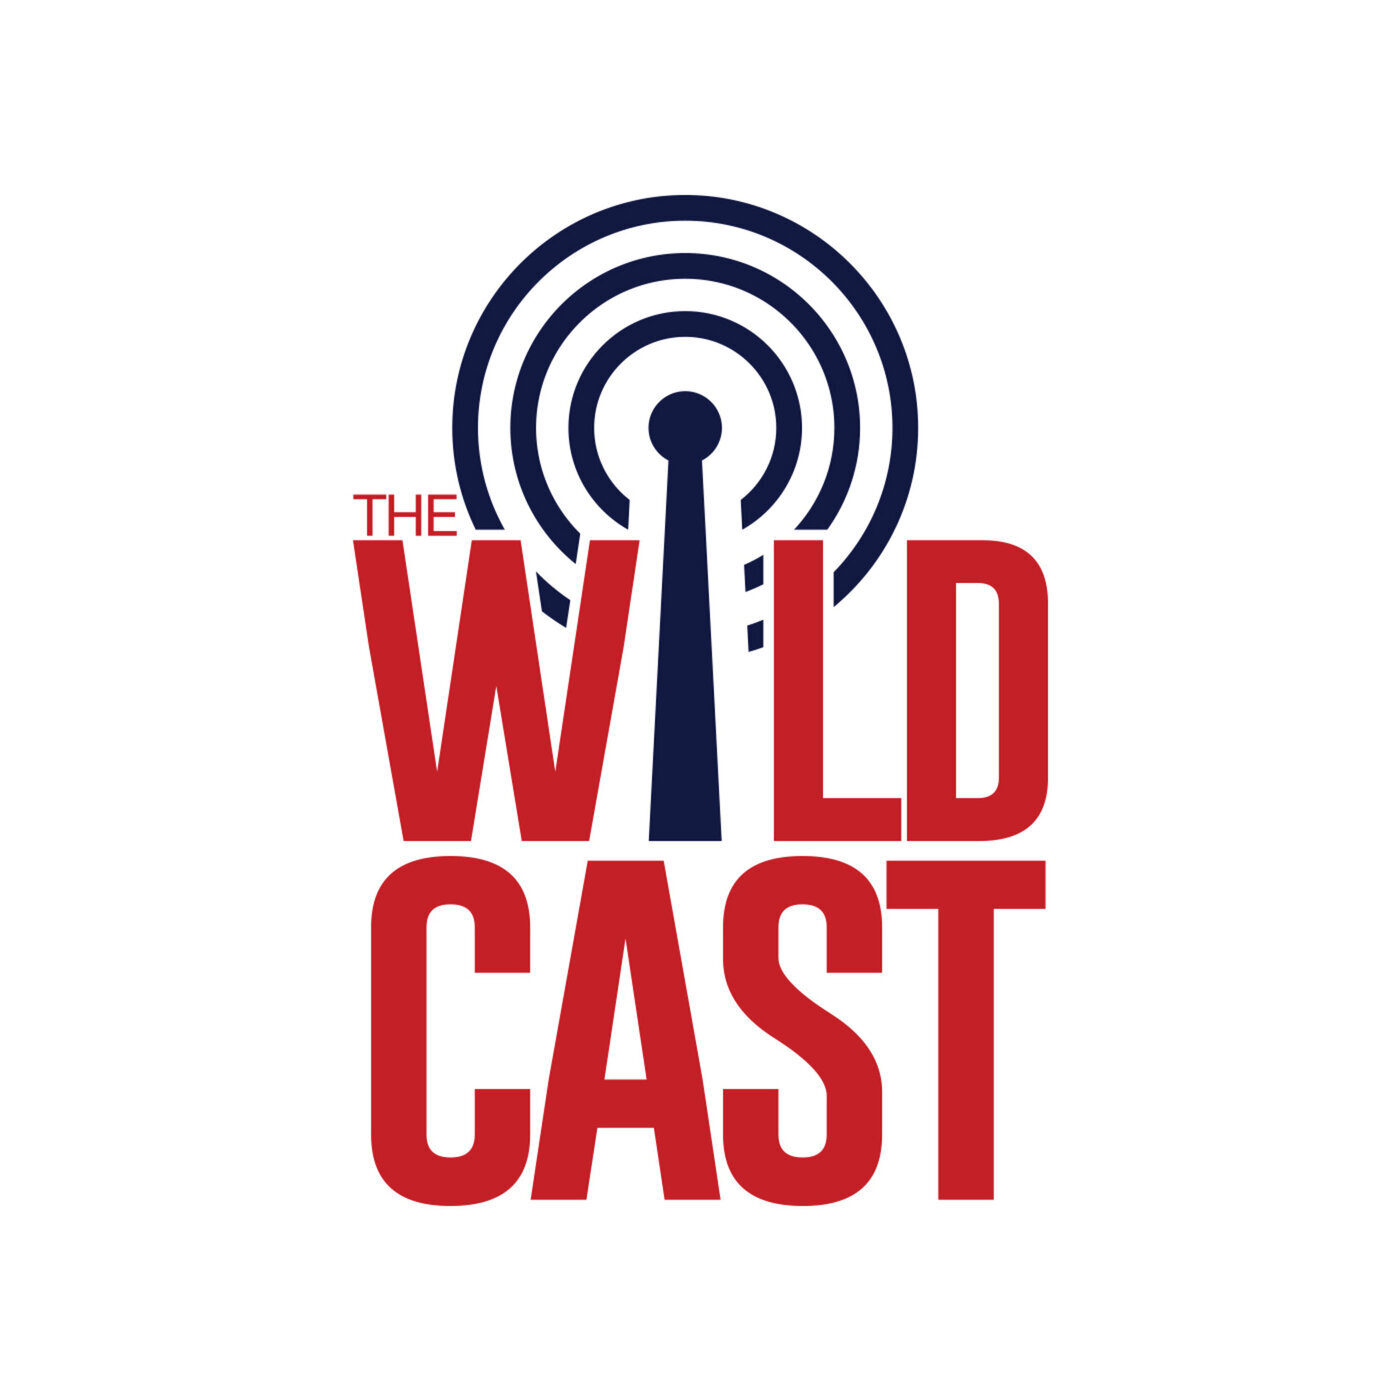 The Wildcast, Episode 460: Dan Patrick talks upcoming trip to Tucson, new book, Arizona basketball, and football conspiracies